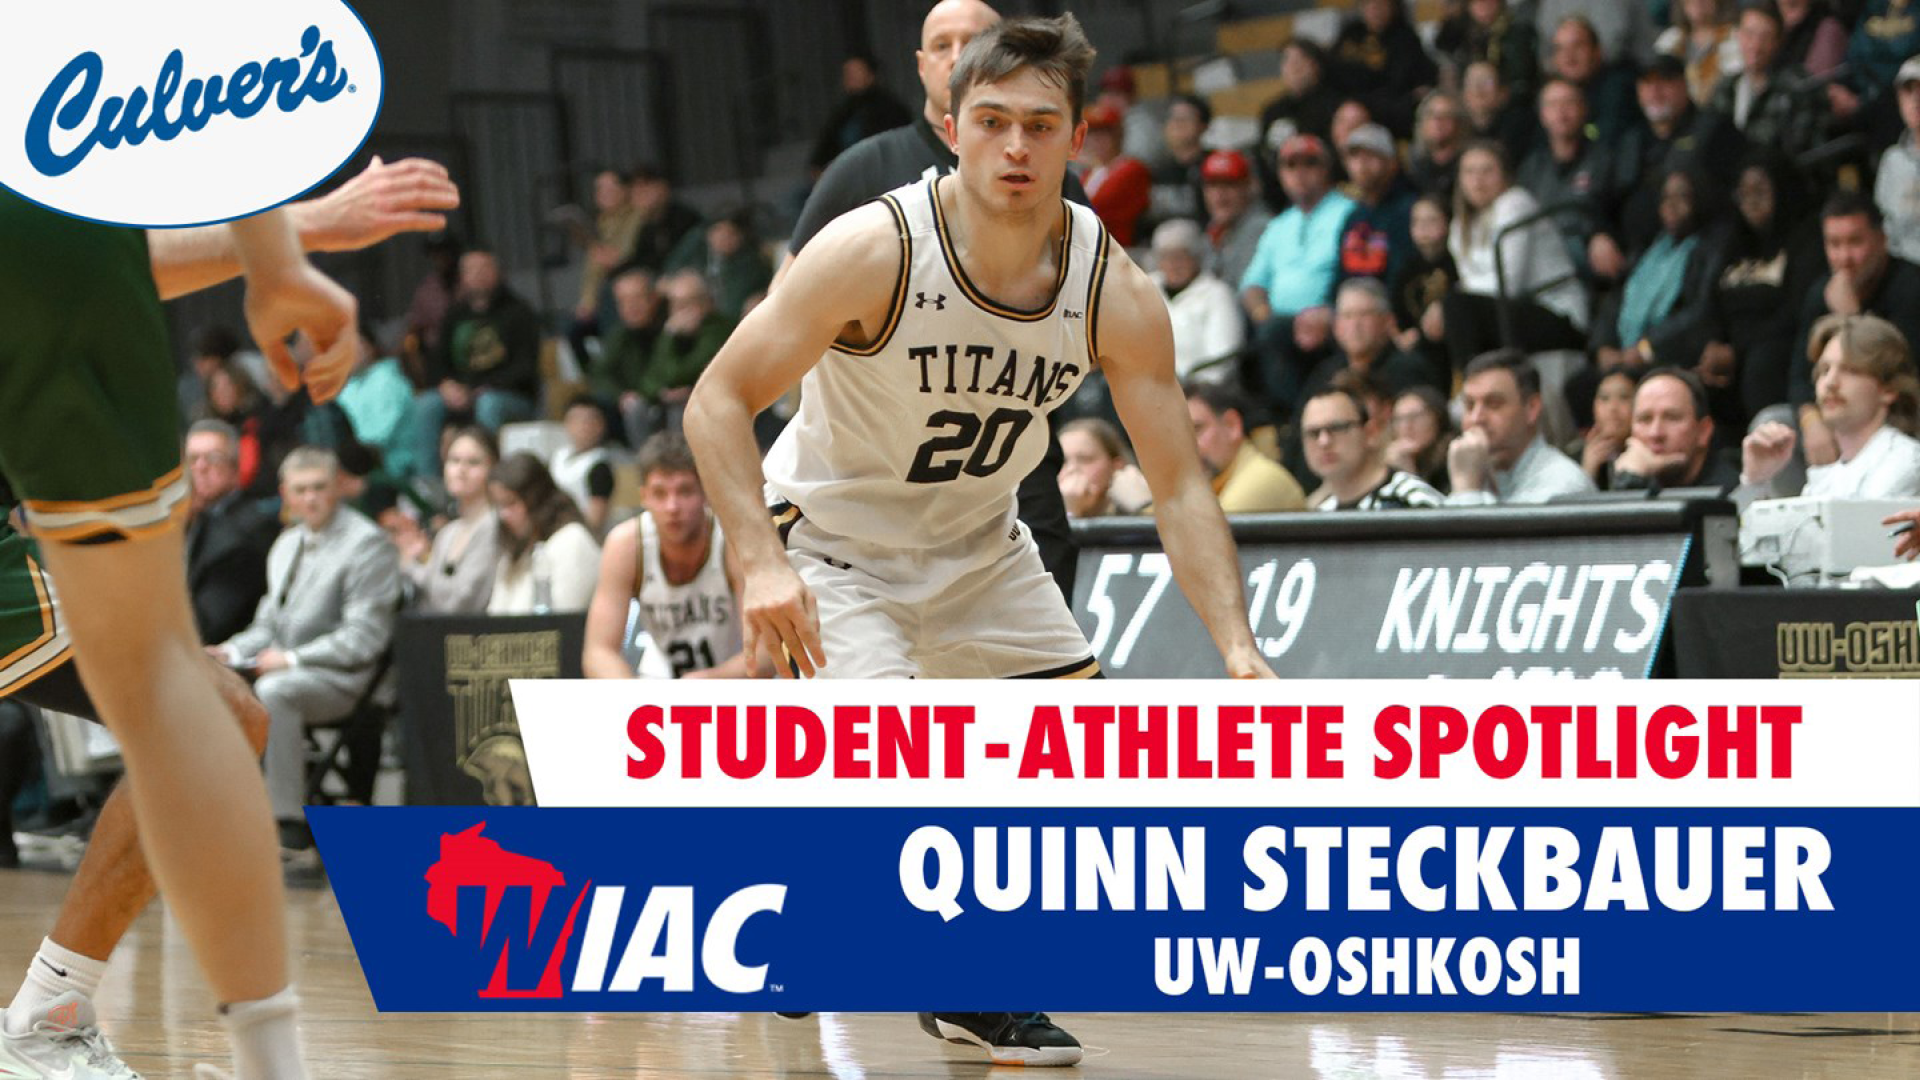 WIAC Student-Athlete Spotlight: Quinn Steckbauer